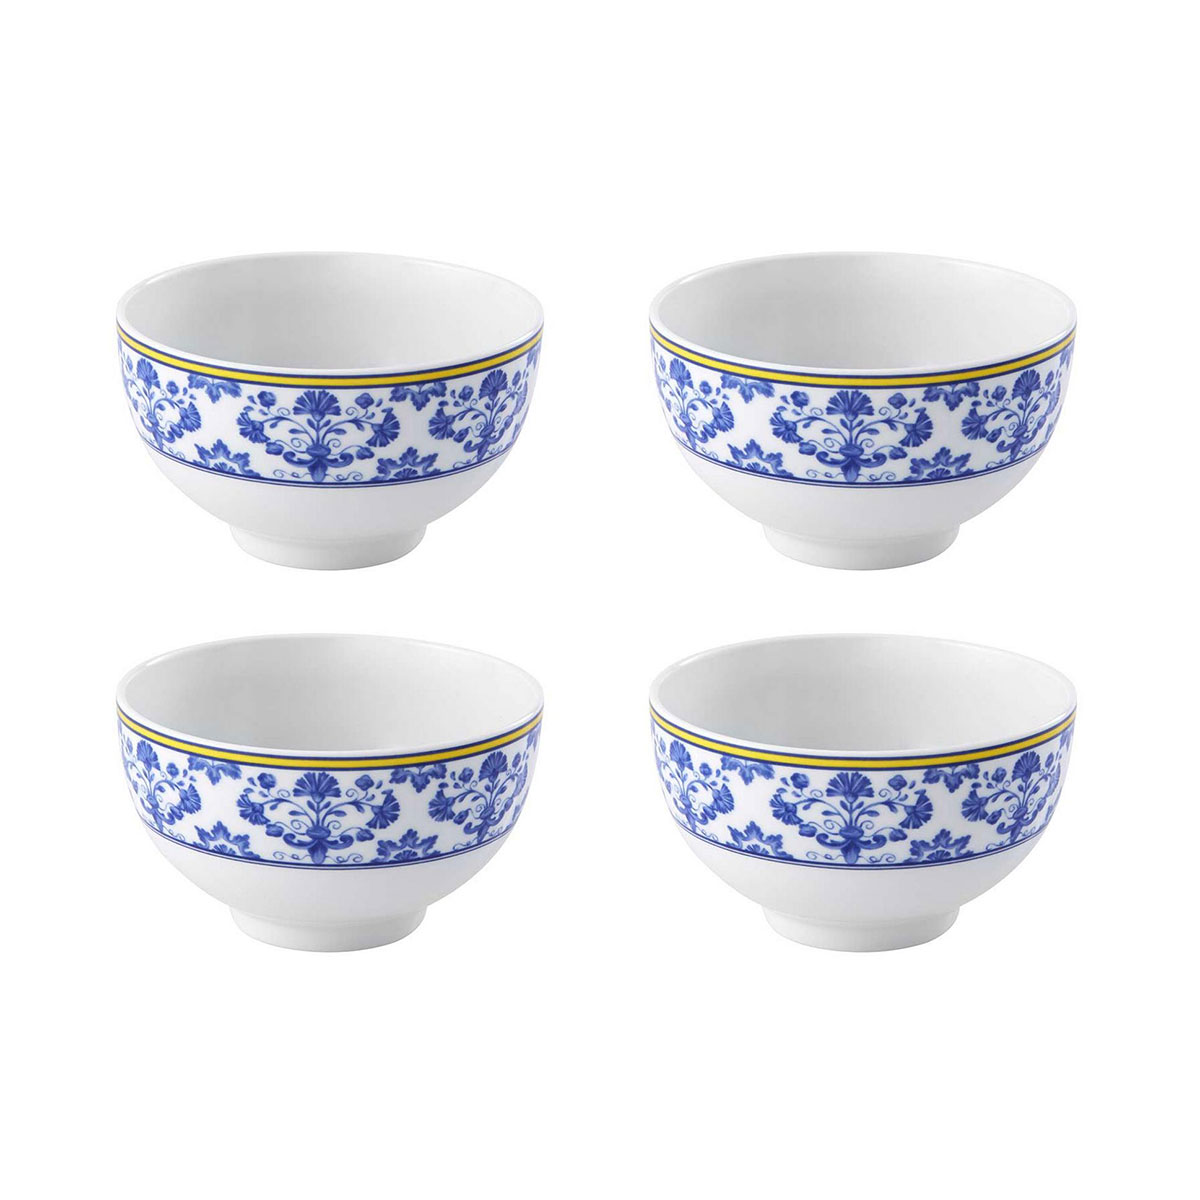 Vista Alegre Porcelain Castelo Branco Rice Bowl, Set of 4